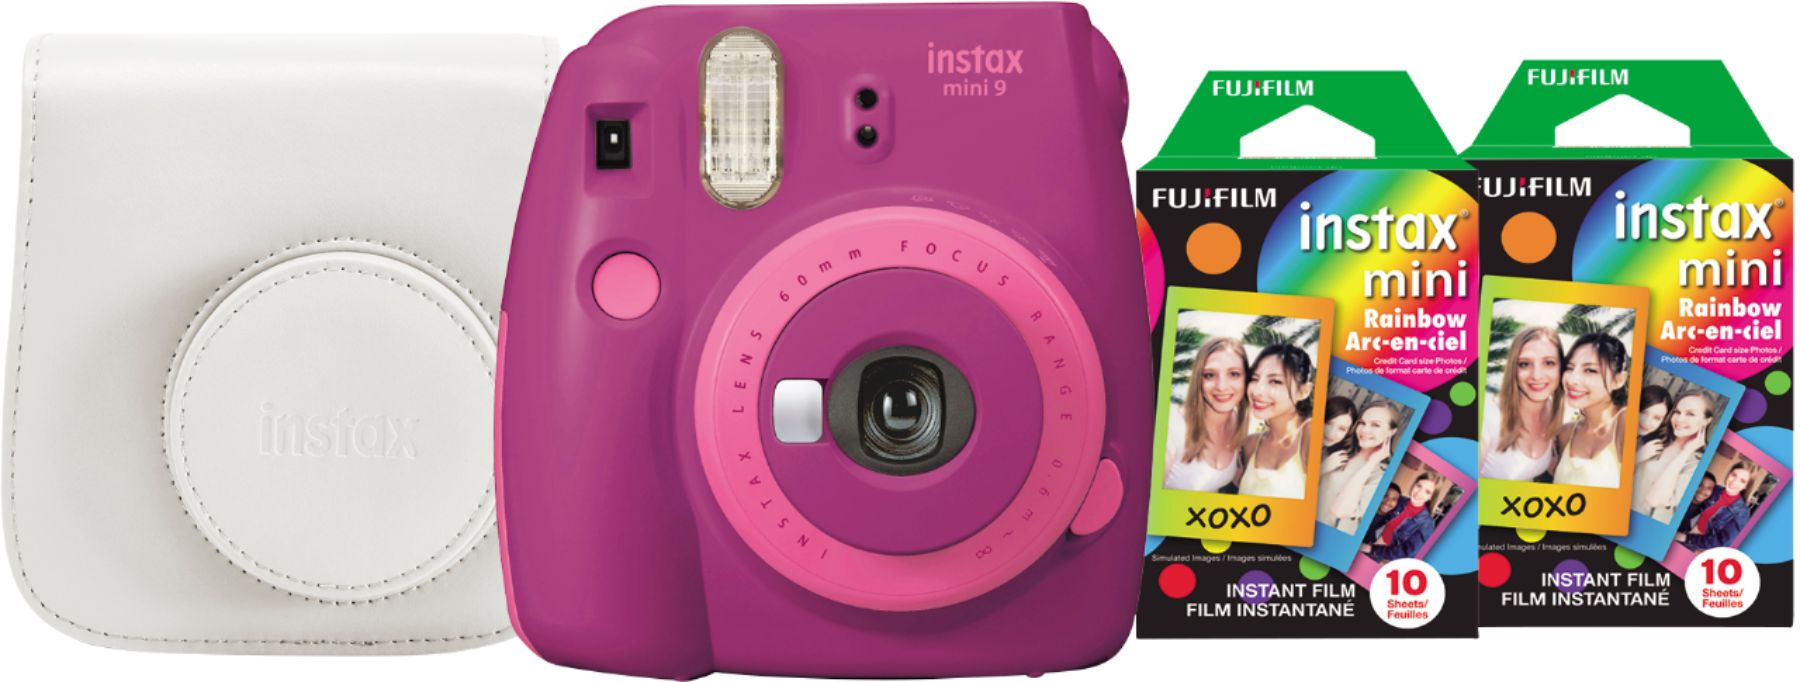 Fujifilm Instax Mini Soft Lavender Photo Film, Imaging